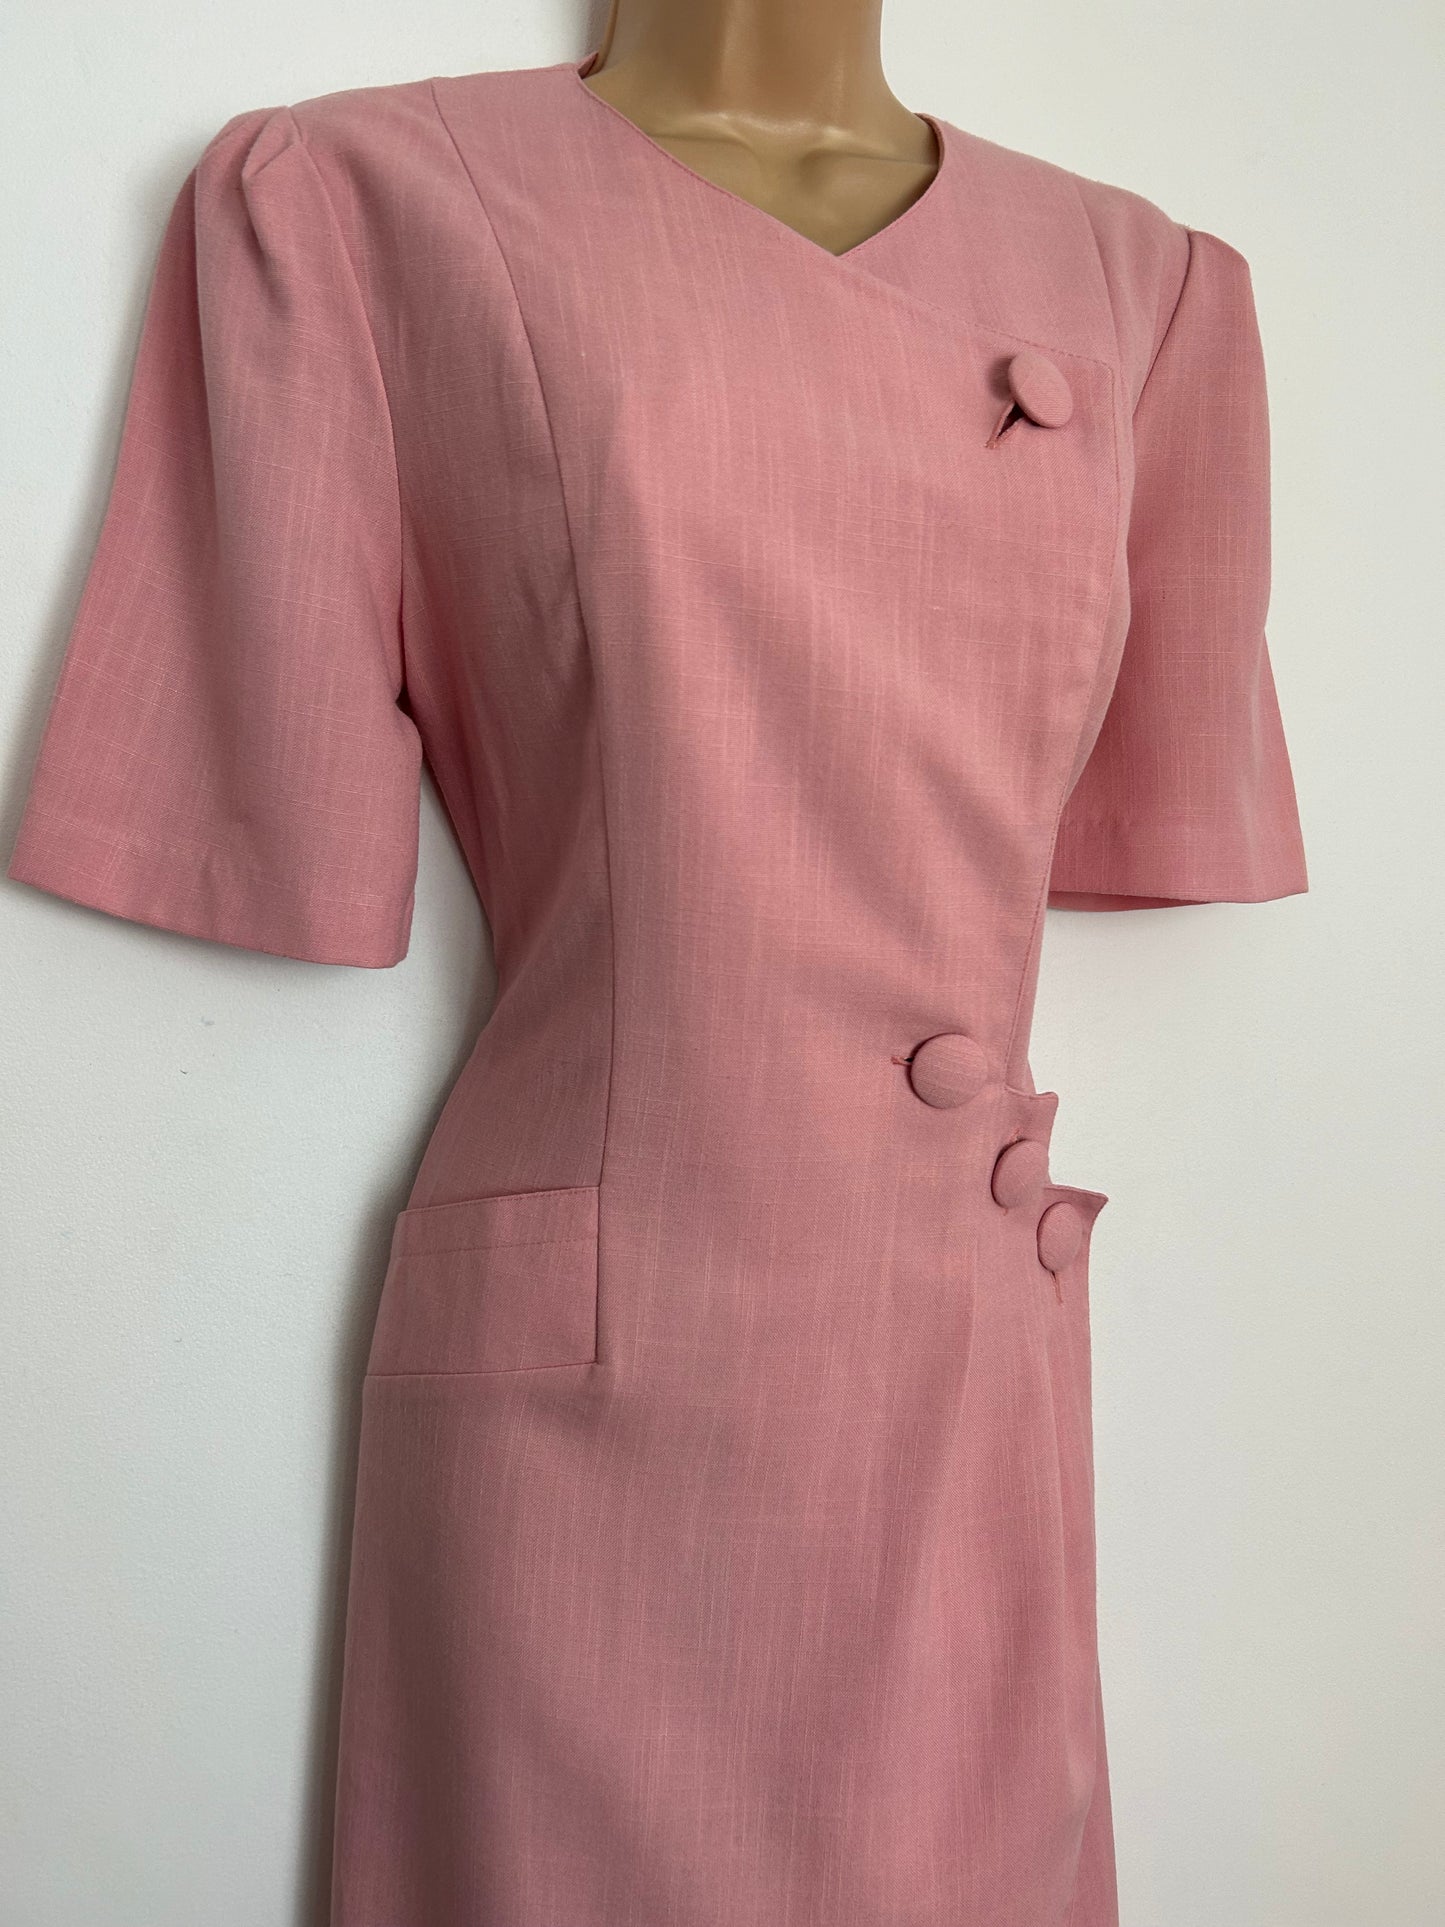 Vintage 1980s SHUBETTE UK Size 10 Pink Short Sleeve Straight Fitting Wrap Dress